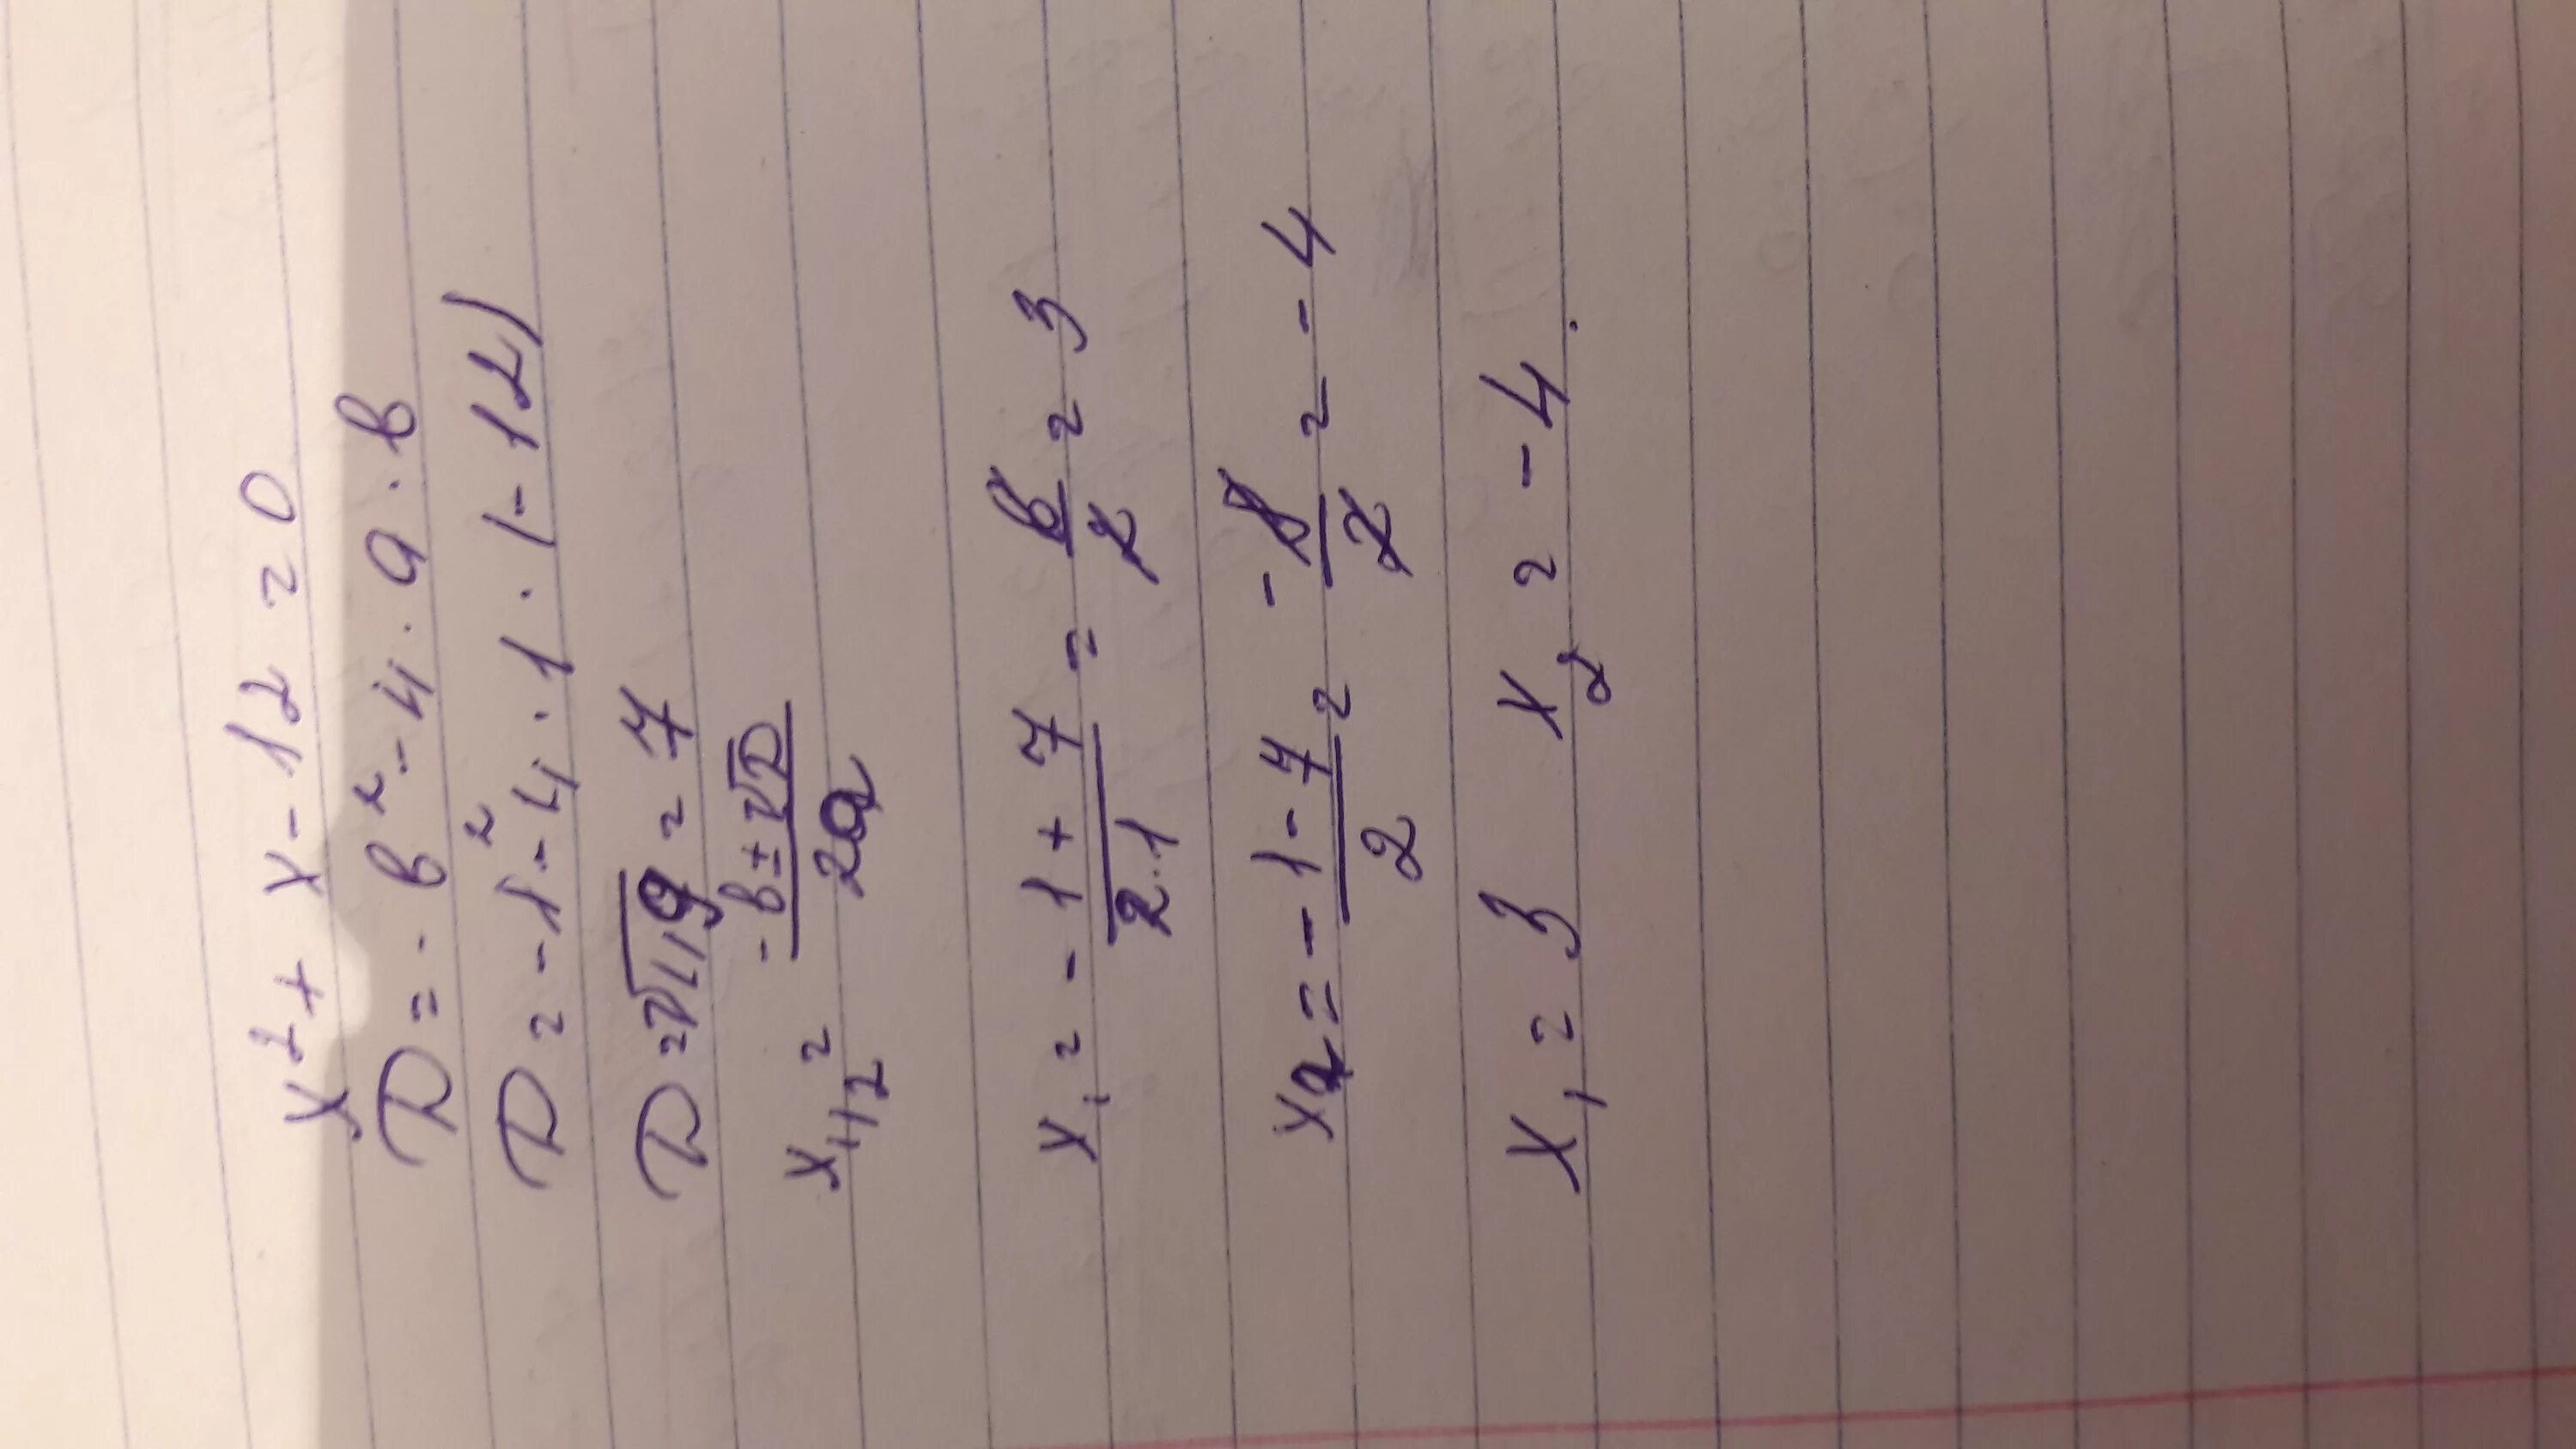 X 2 −2x 1 − (x−1) 2 1 = 12 1. X2 x 12 0 решение уравнения. Решите уравнение 2 x +− = x 12 0.. X2+x-12 0. 2x 2 11 12 0